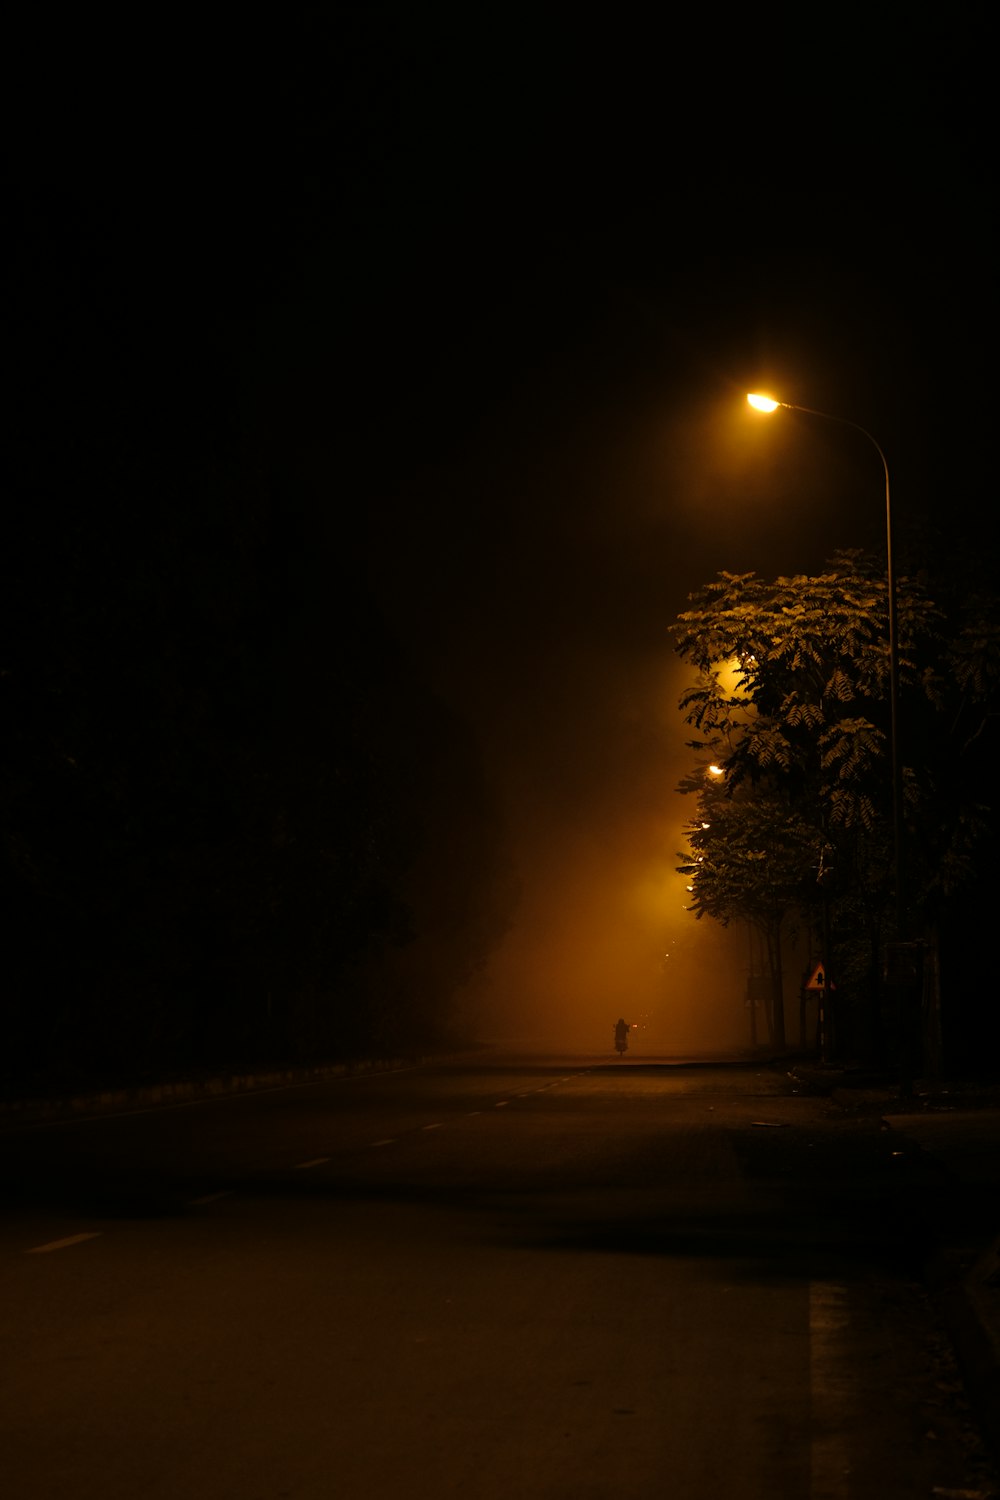 a street light shines on a dark street